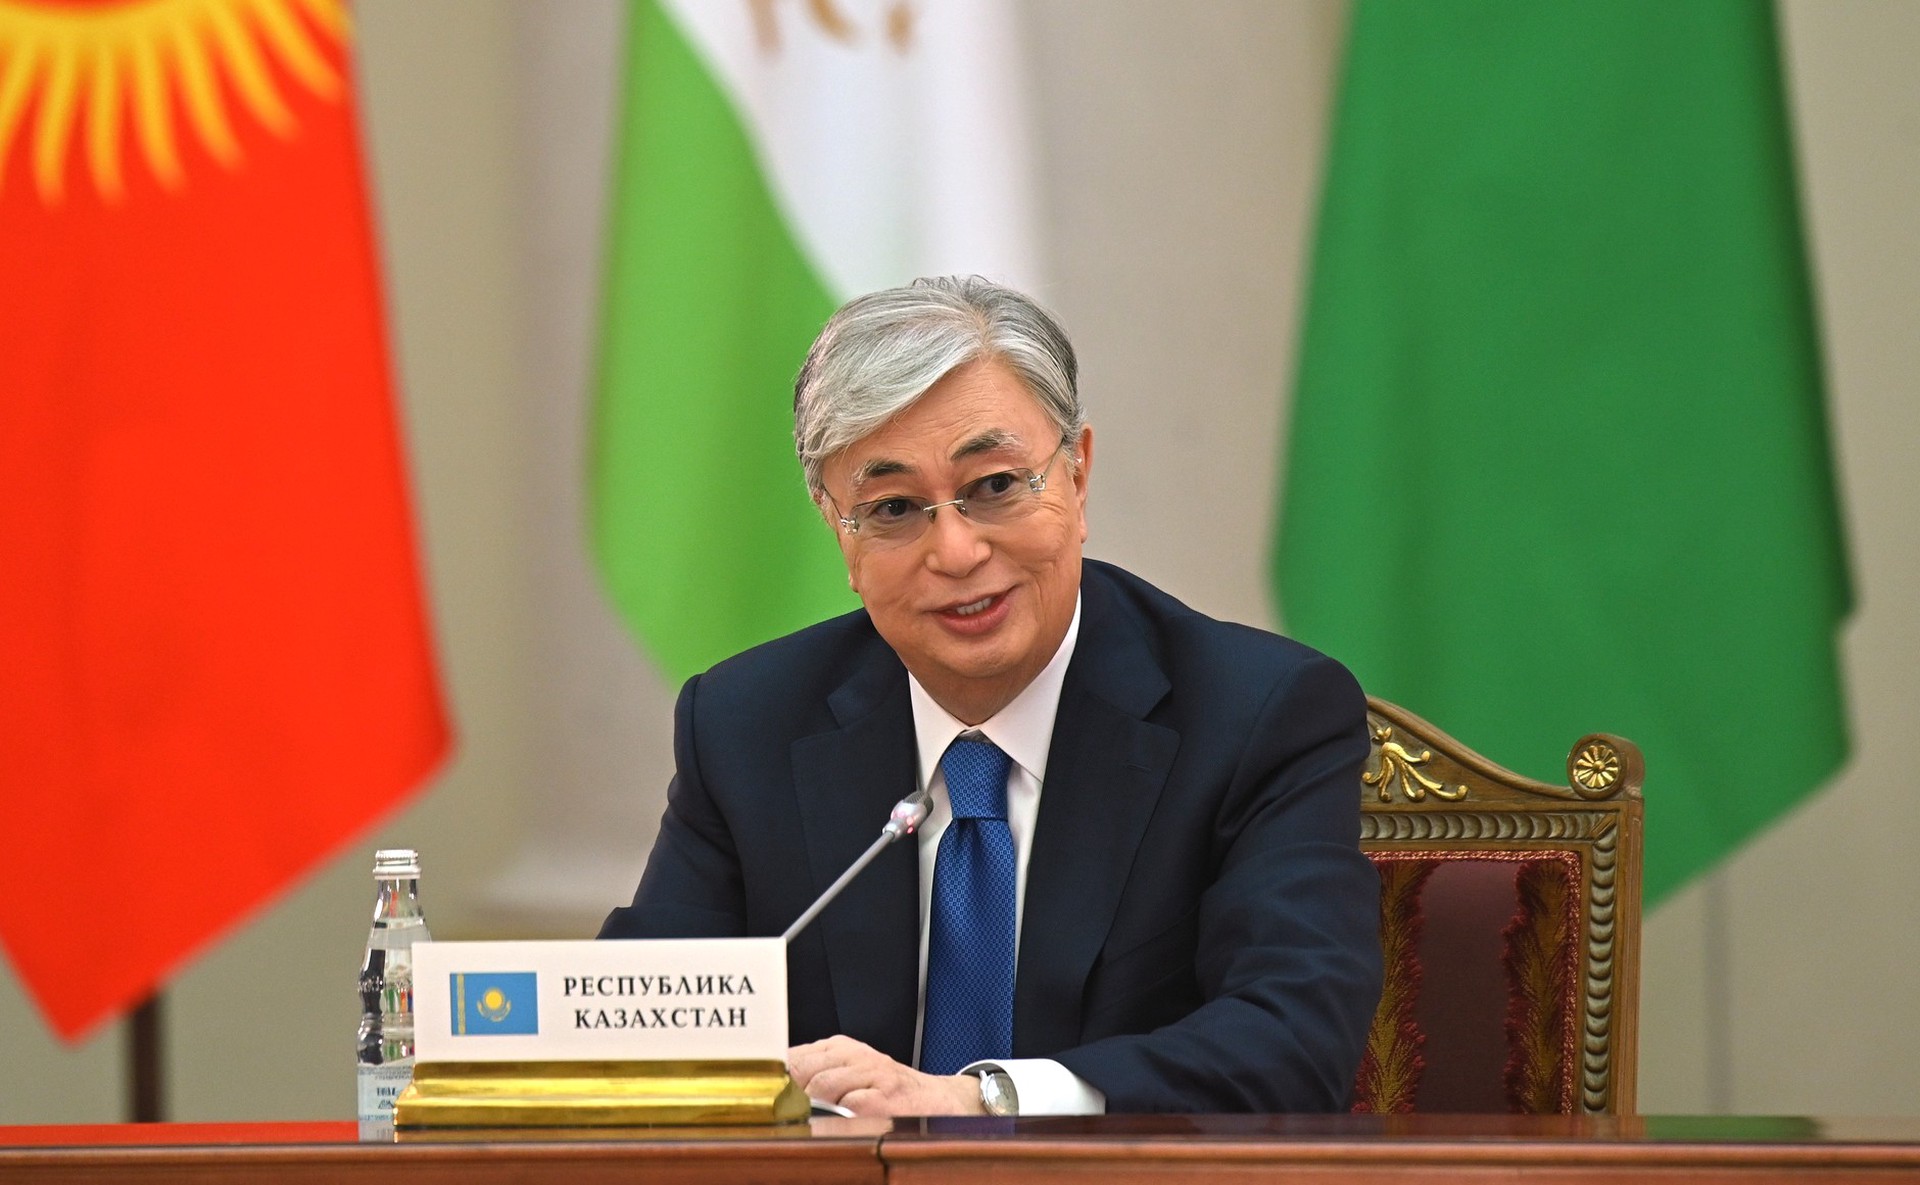 Президент Казахстана Токаев распустил нижнюю палату парламента страны